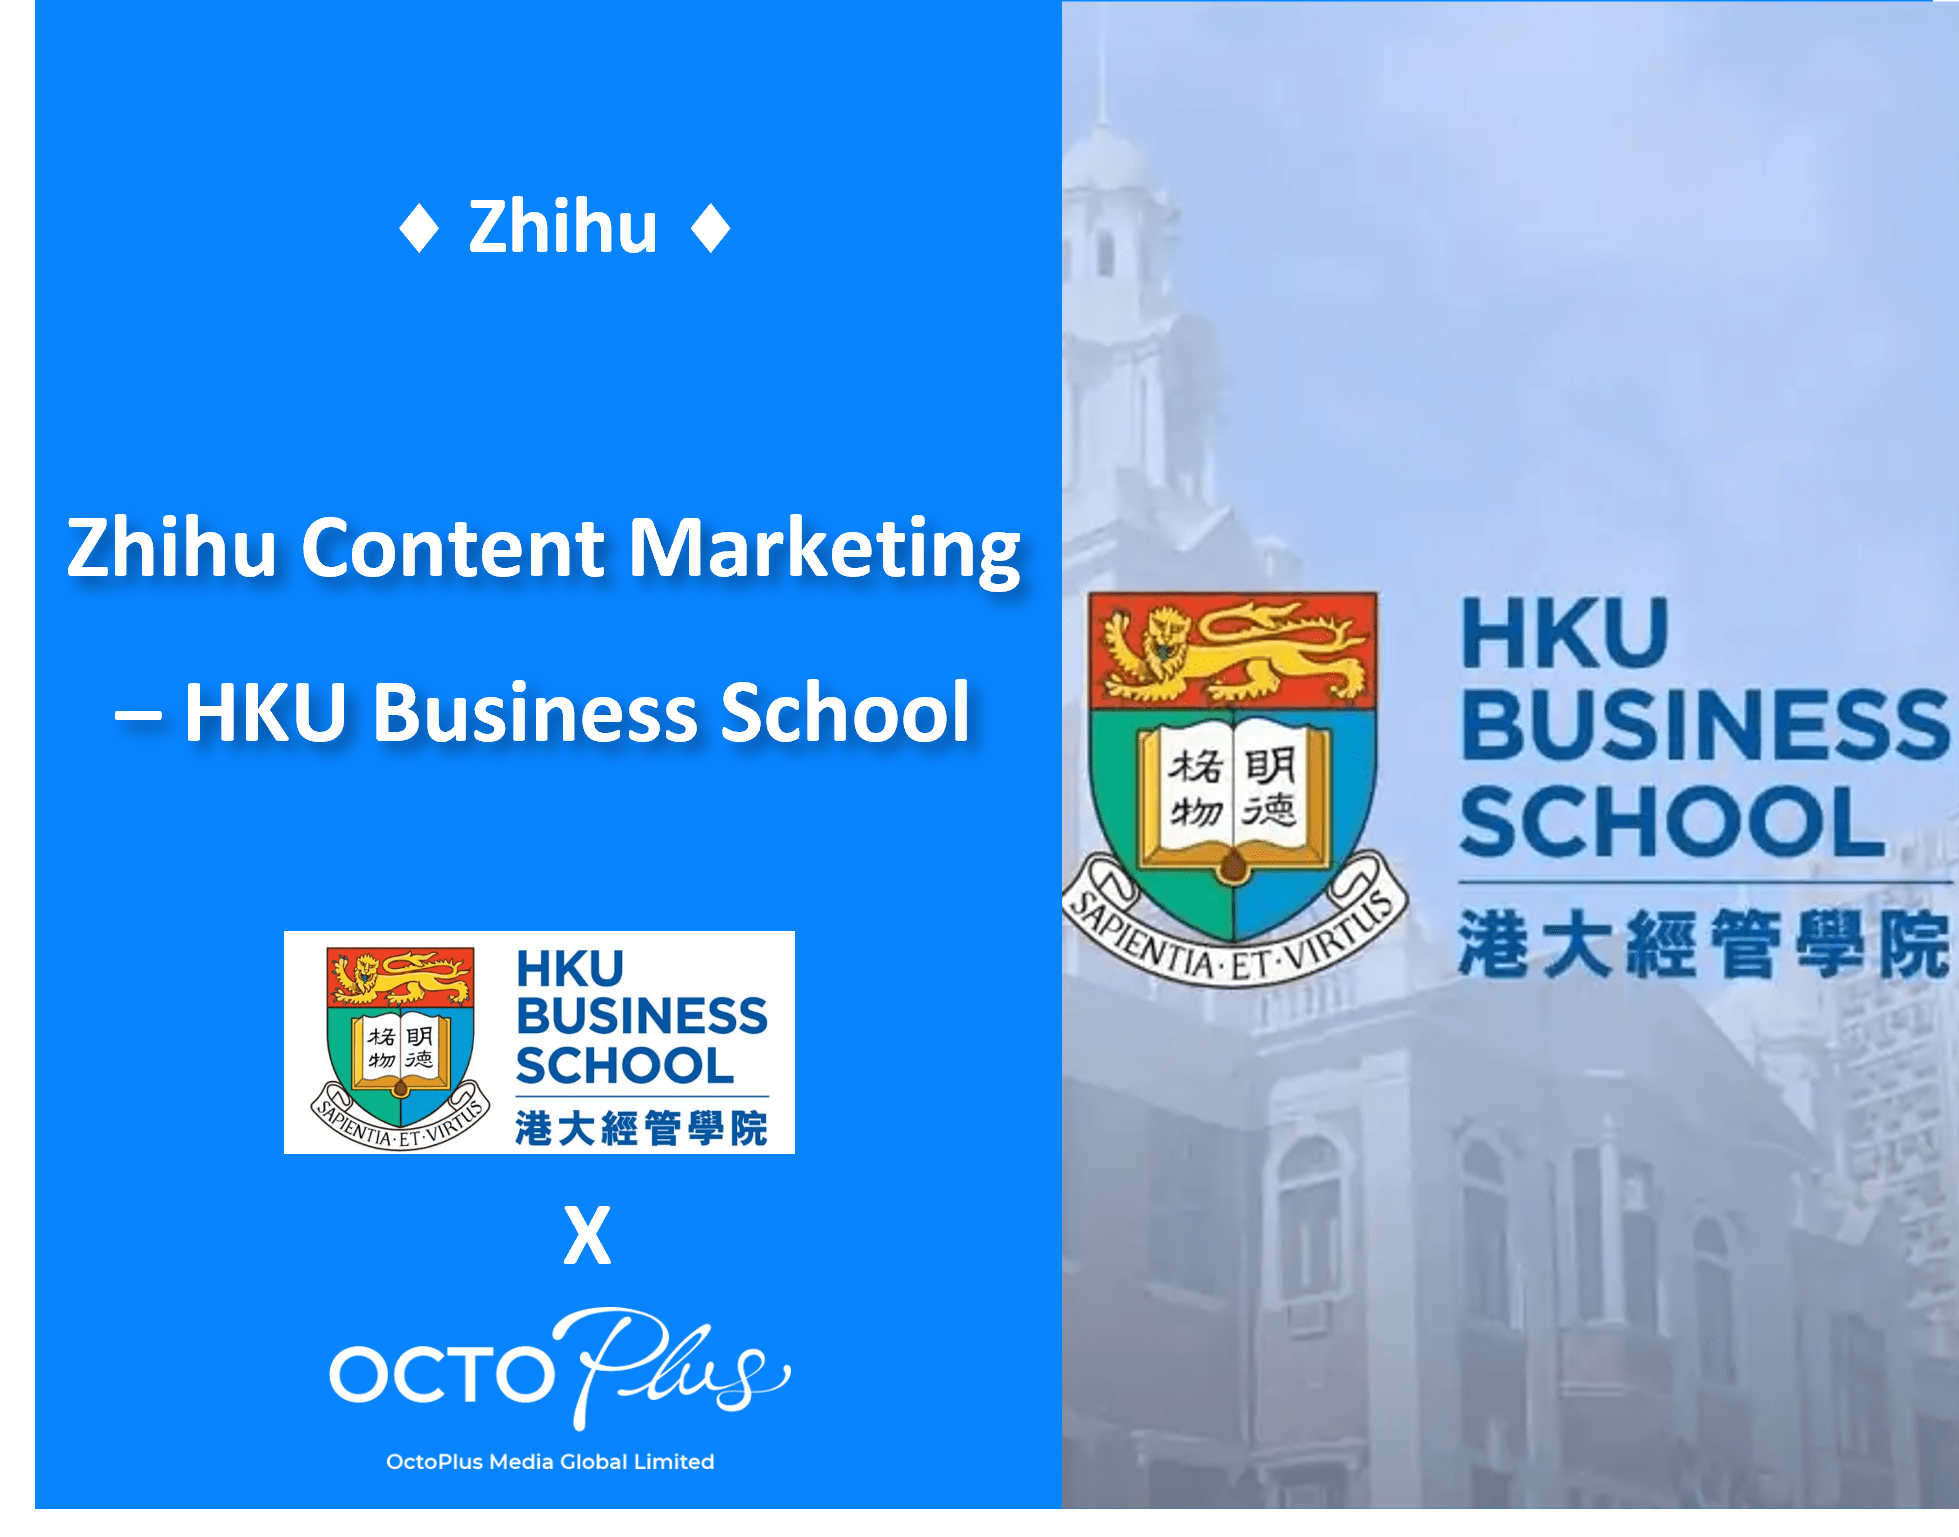 Zhihu - HKU Business School